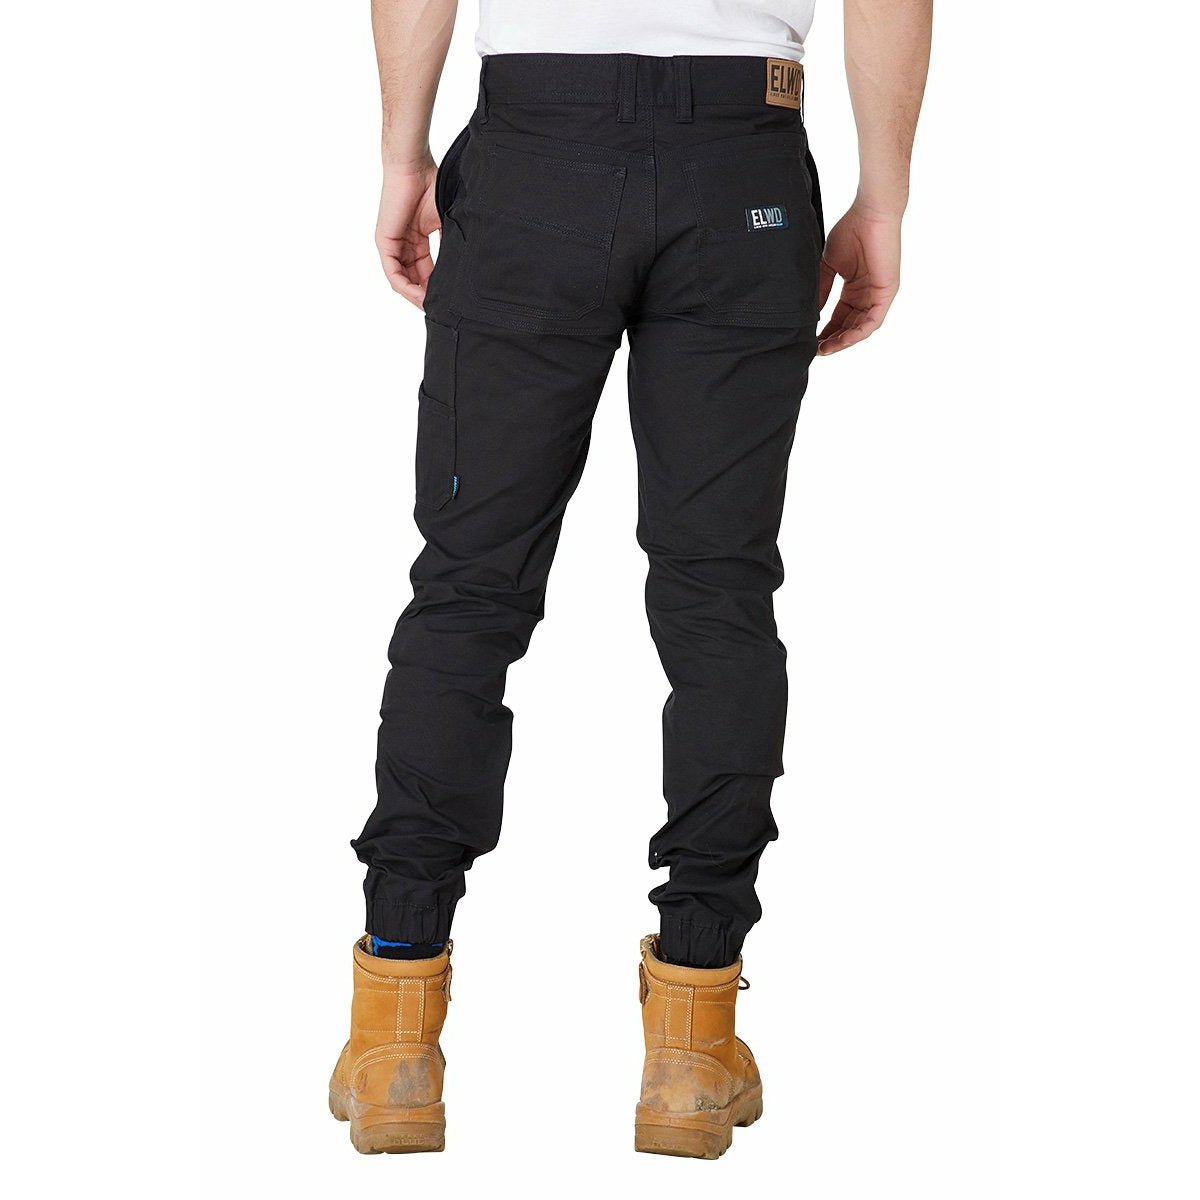 dSTRUCT Project Mens Burgundy Joggers Skinny Cuffed Trousers Cargo Pants  BNWT | eBay